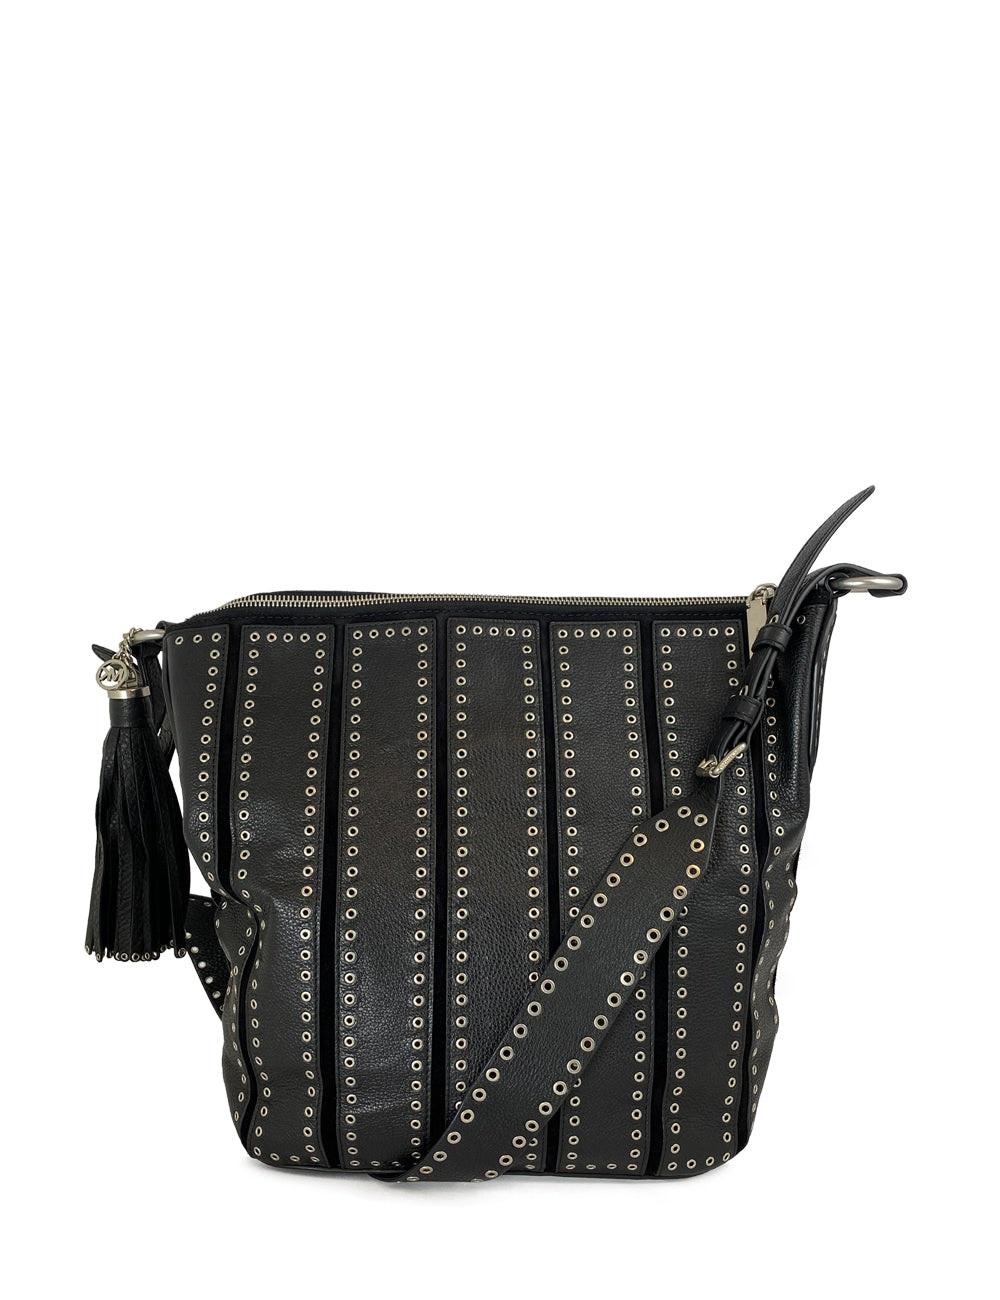 Michael Kors Black Leather Silver-Eyelets Stripe Handbag